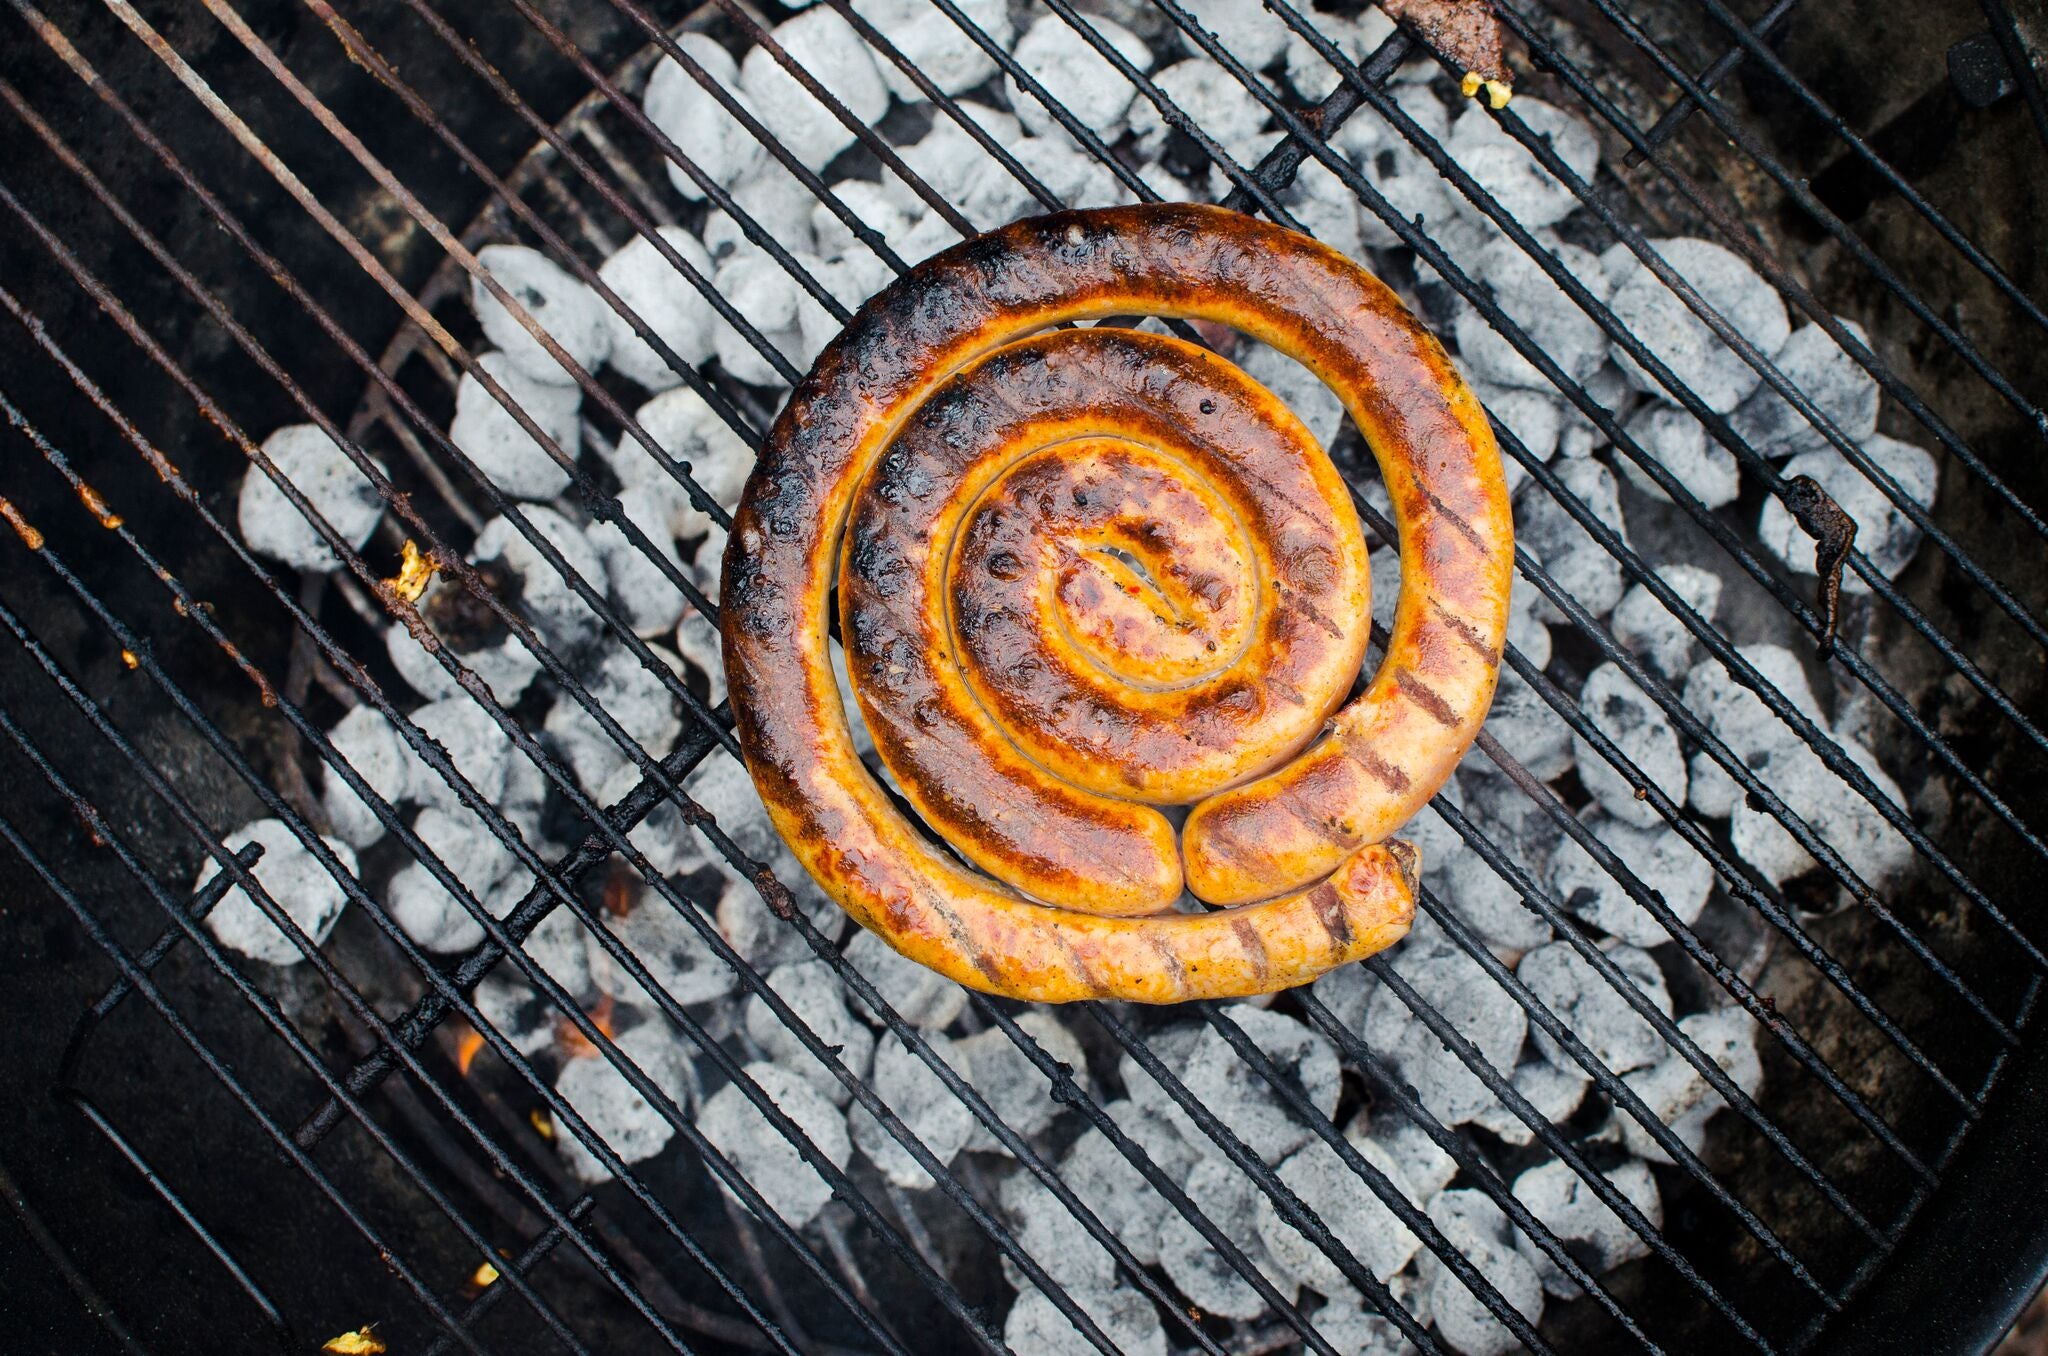 Heritage Pork Sausage Wheel on the grill